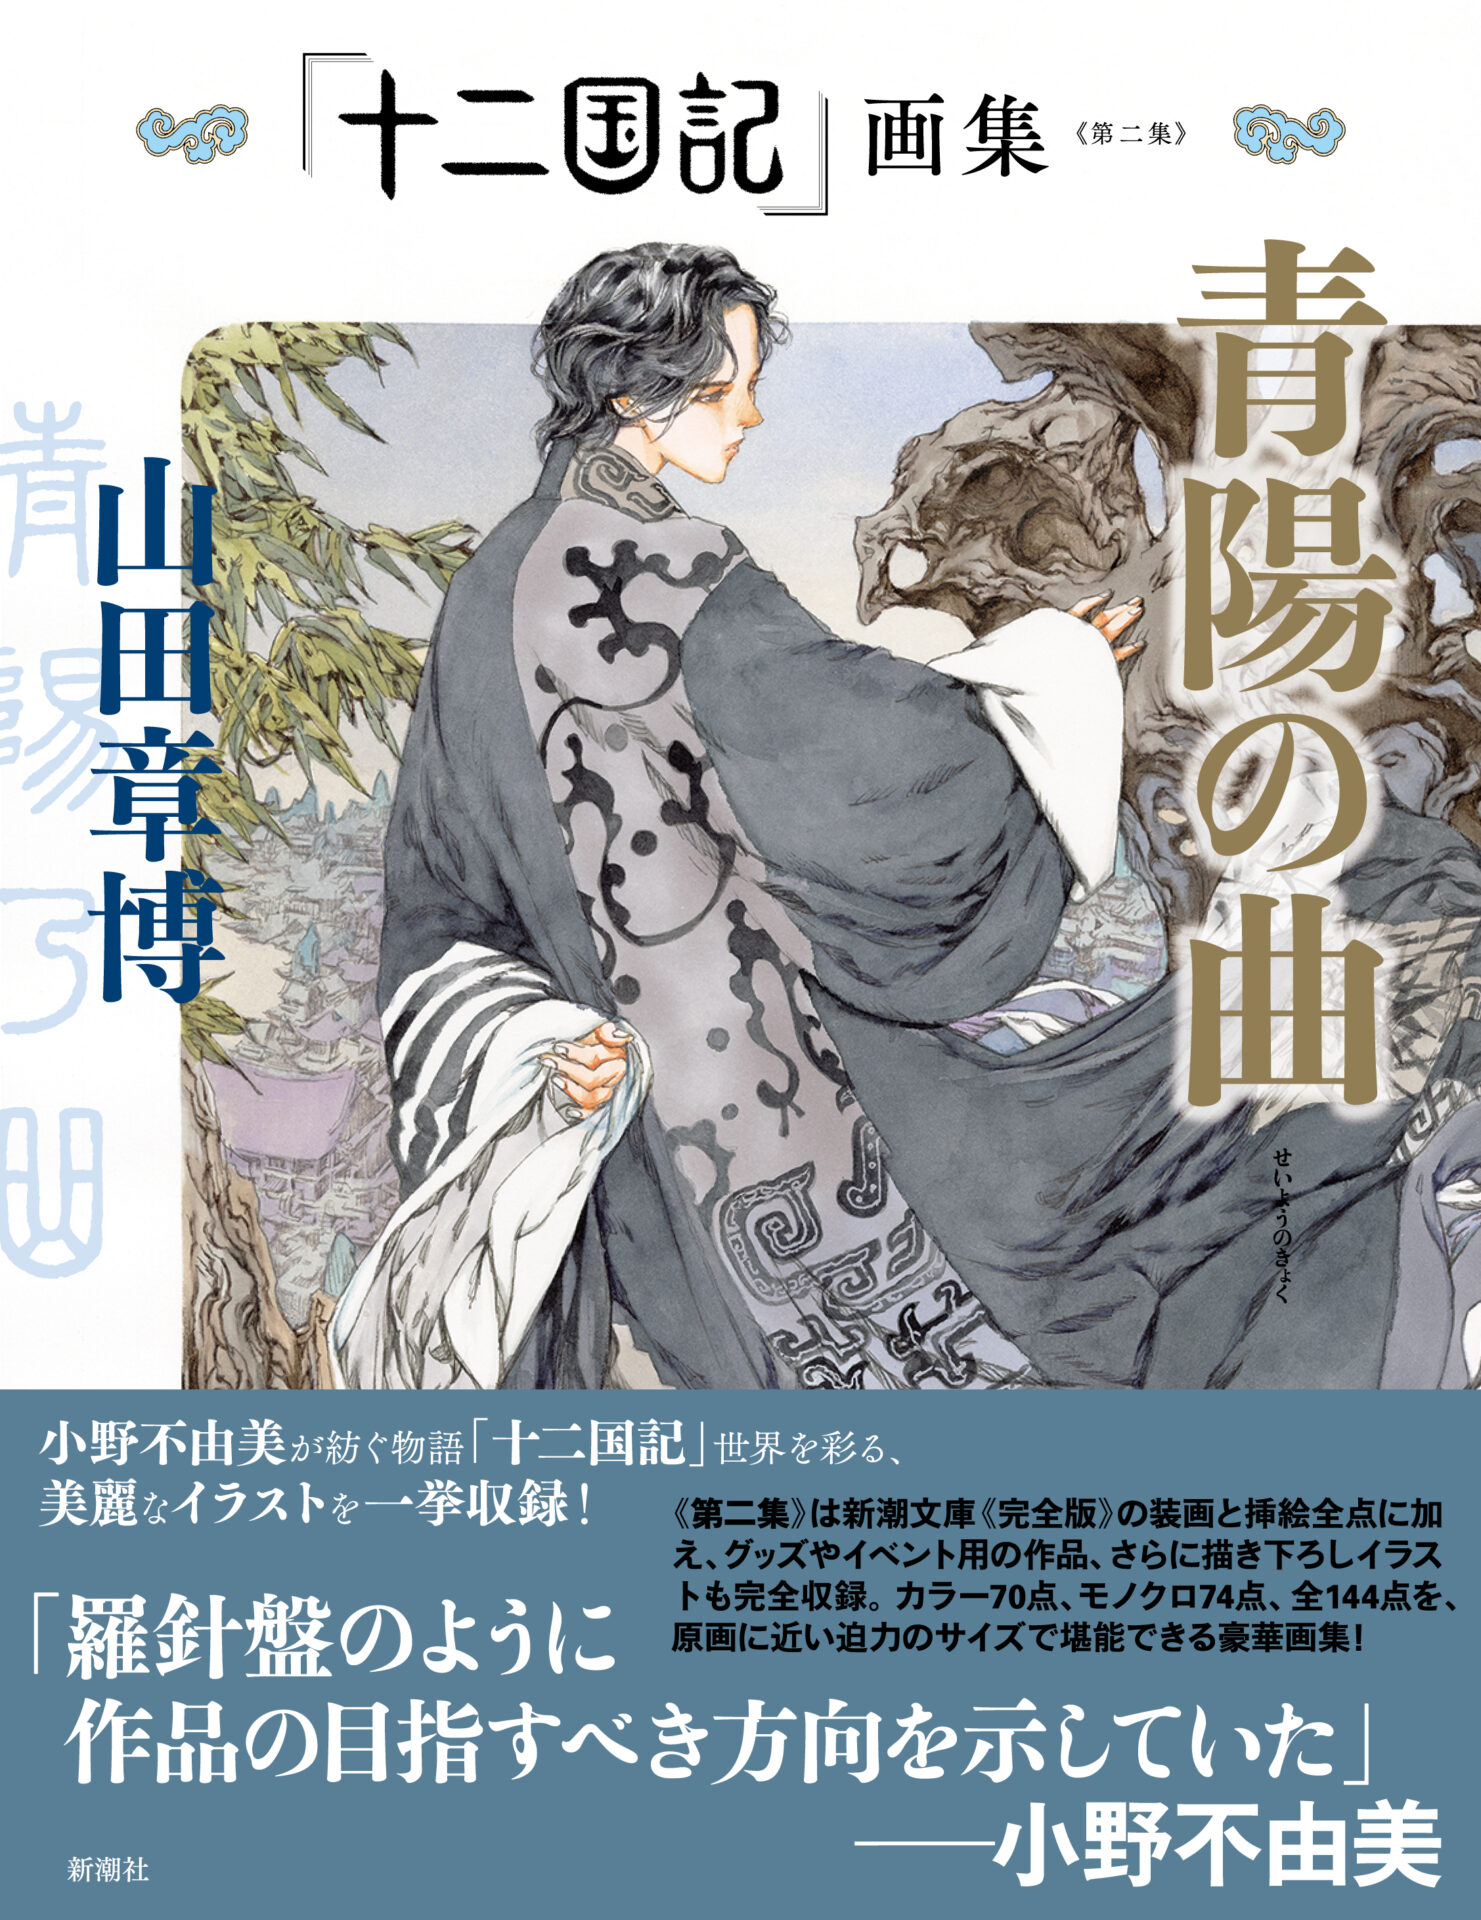 FK-002京都 祇園祭り限定版画サイン額装作家マック安中